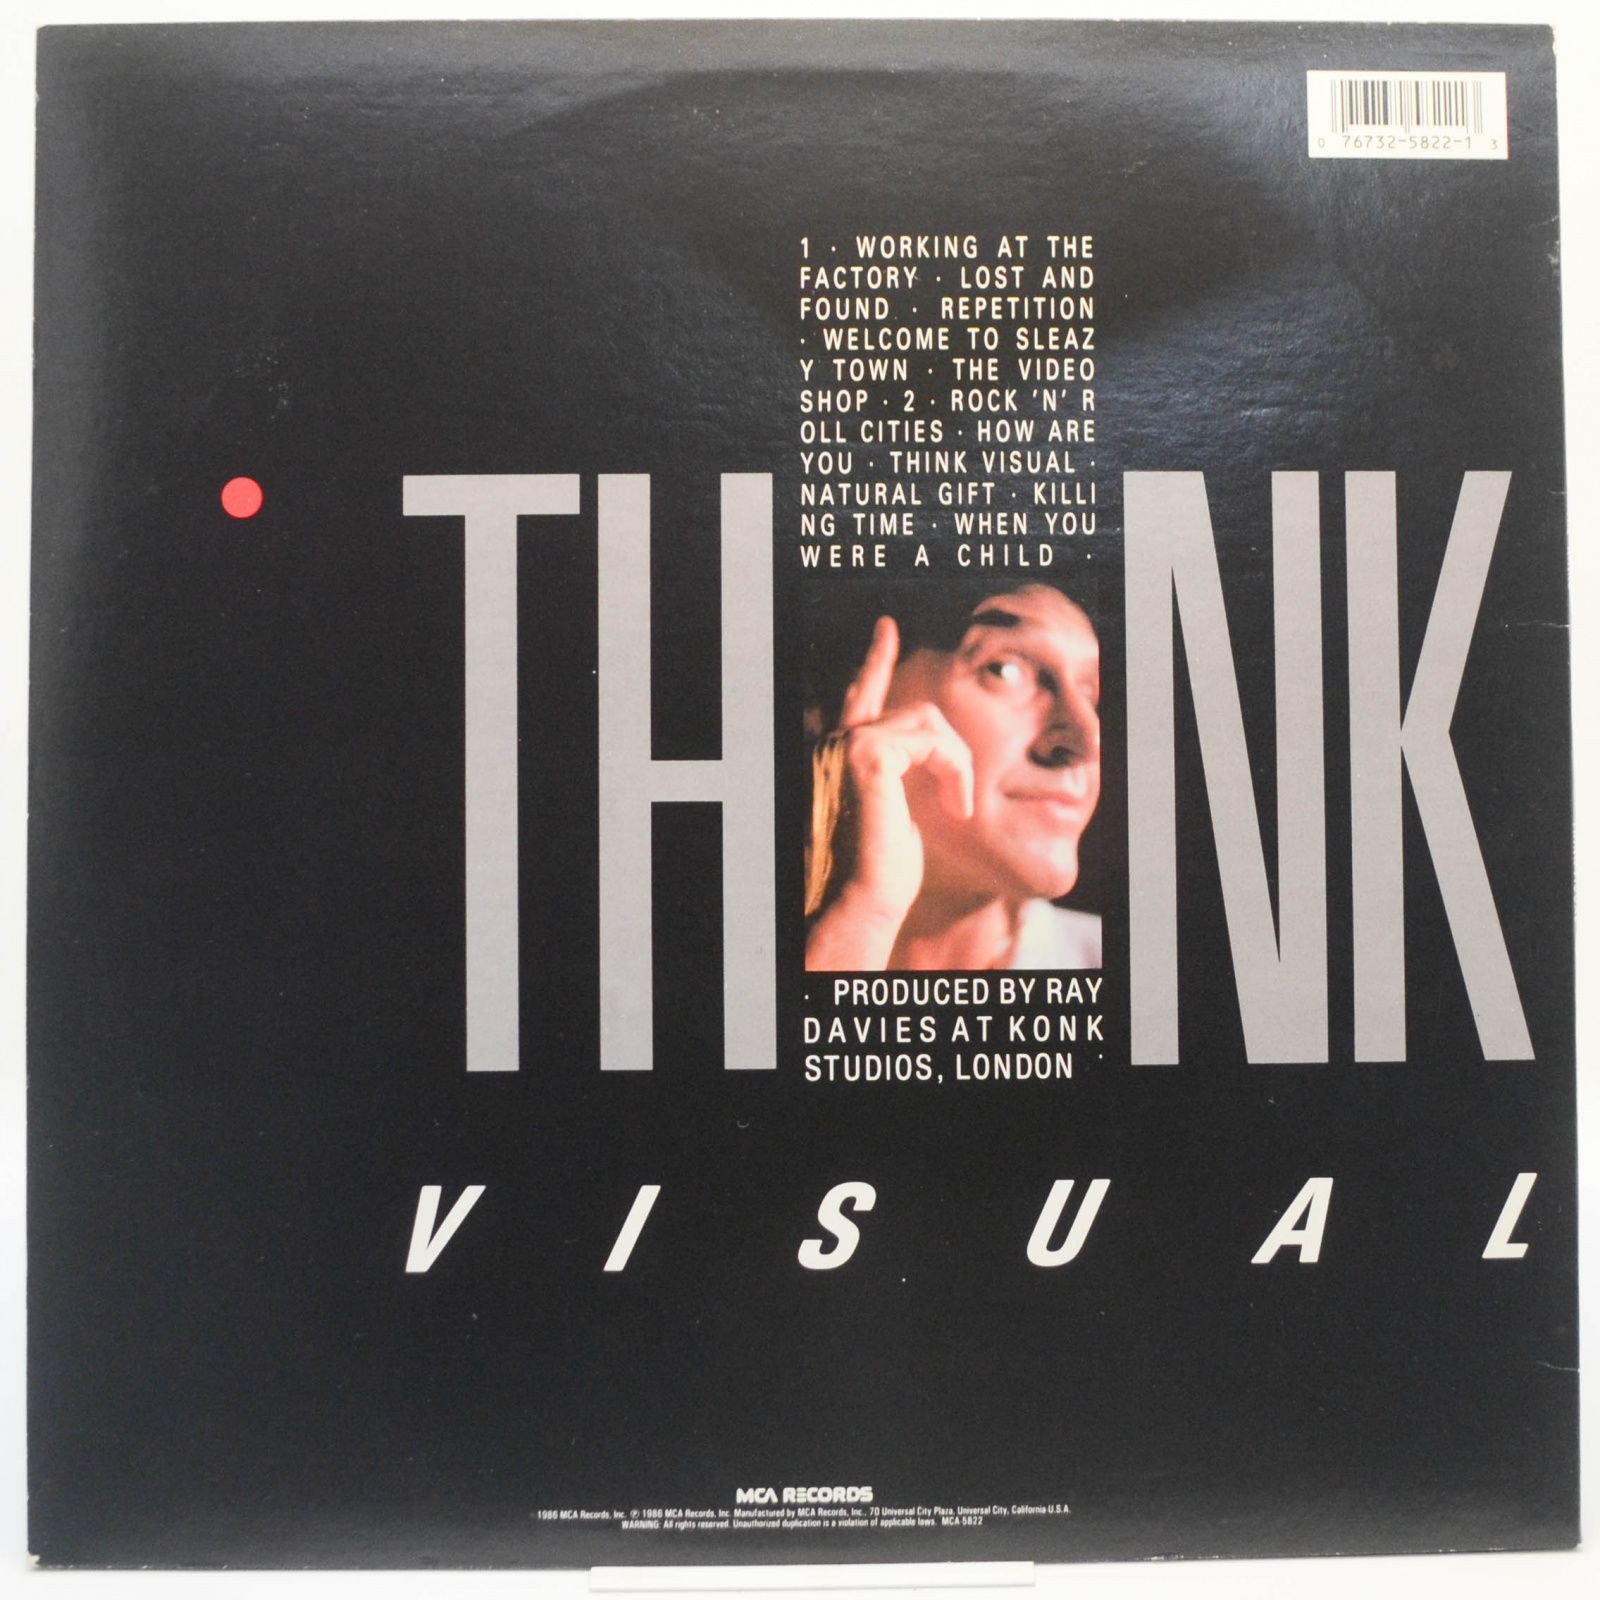 Kinks — Think Visual (USA), 1986